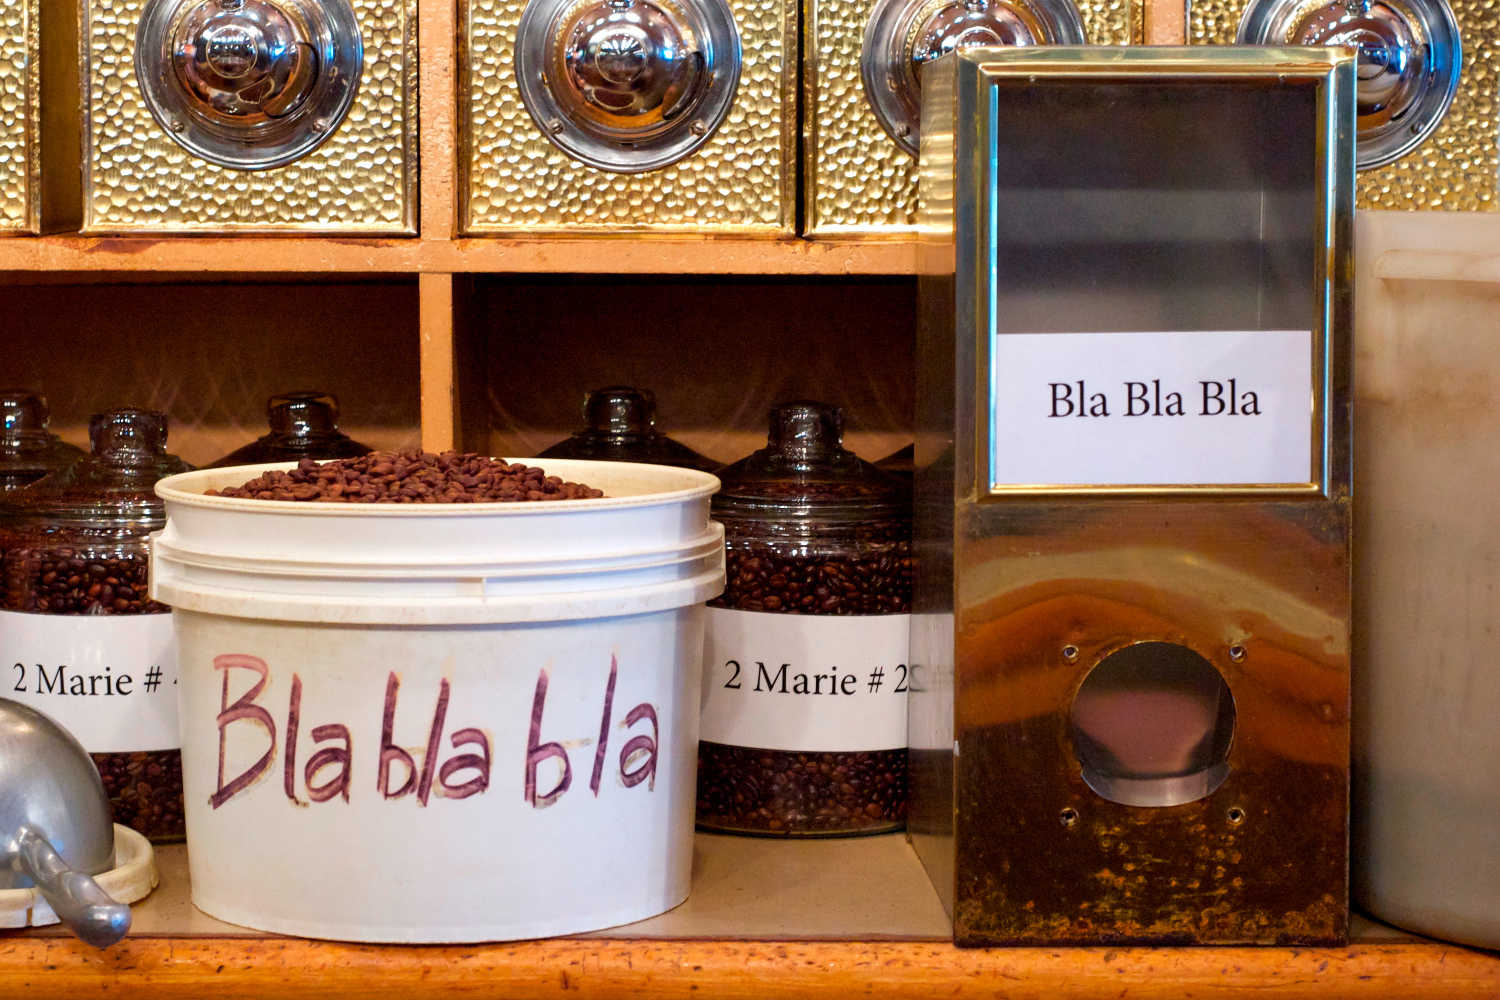 Coffee named Blablabla